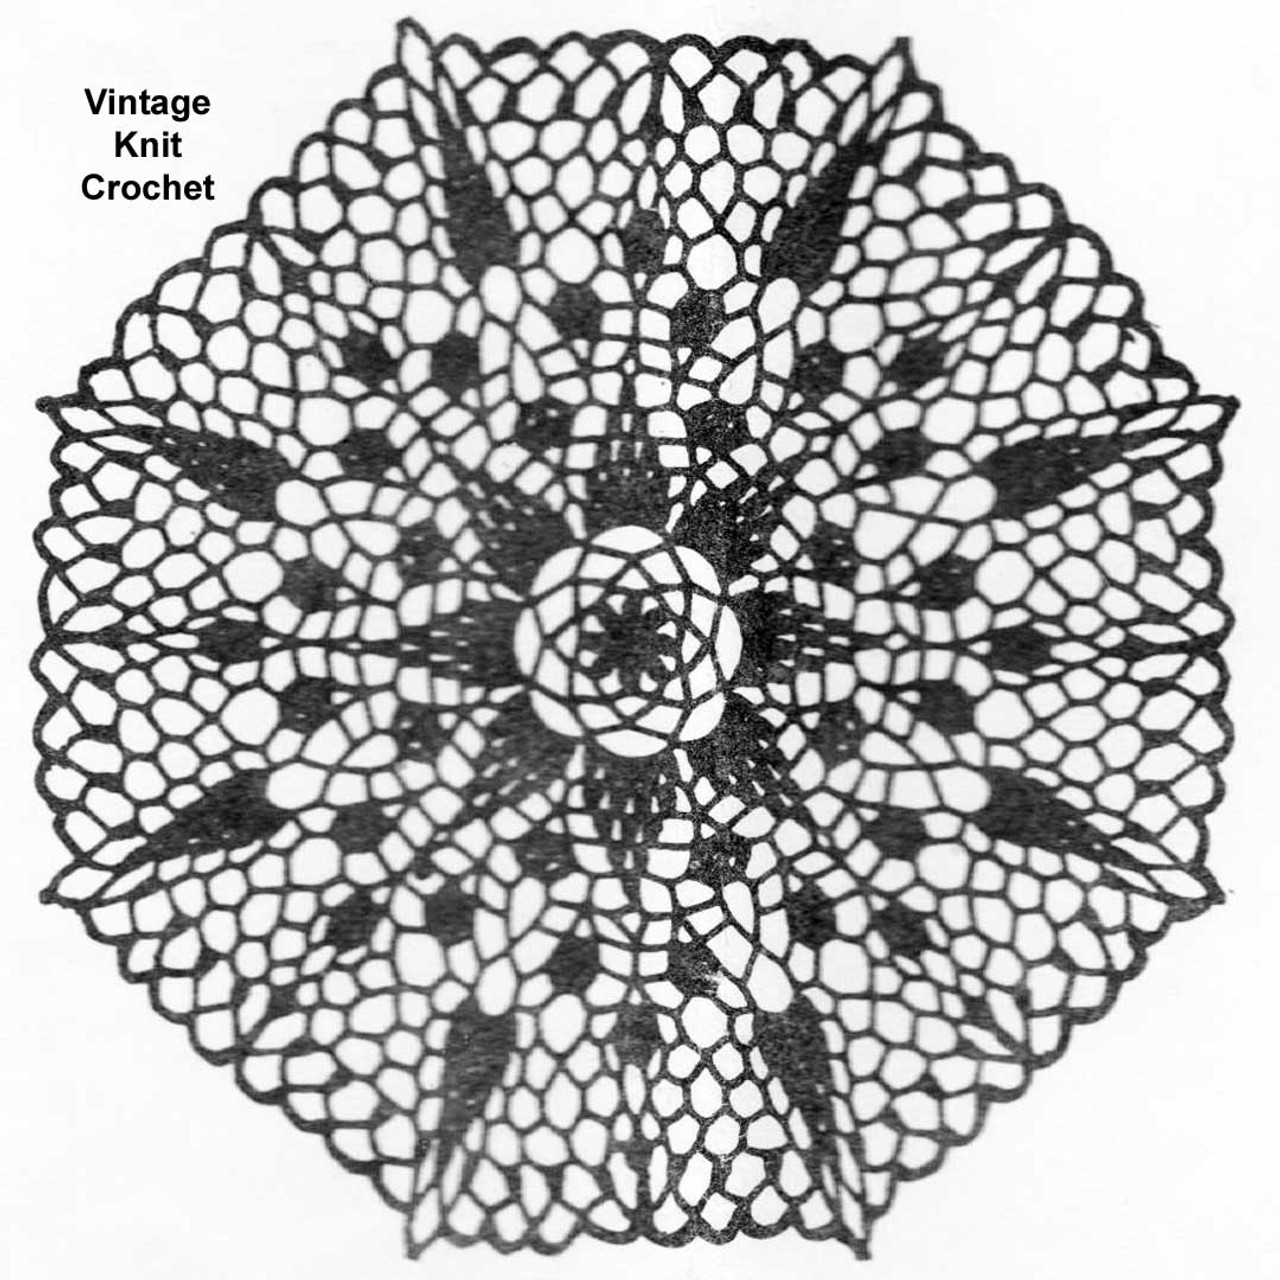 Vintage Starburst Crochet Doily Pattern, Anne Cabot 5861